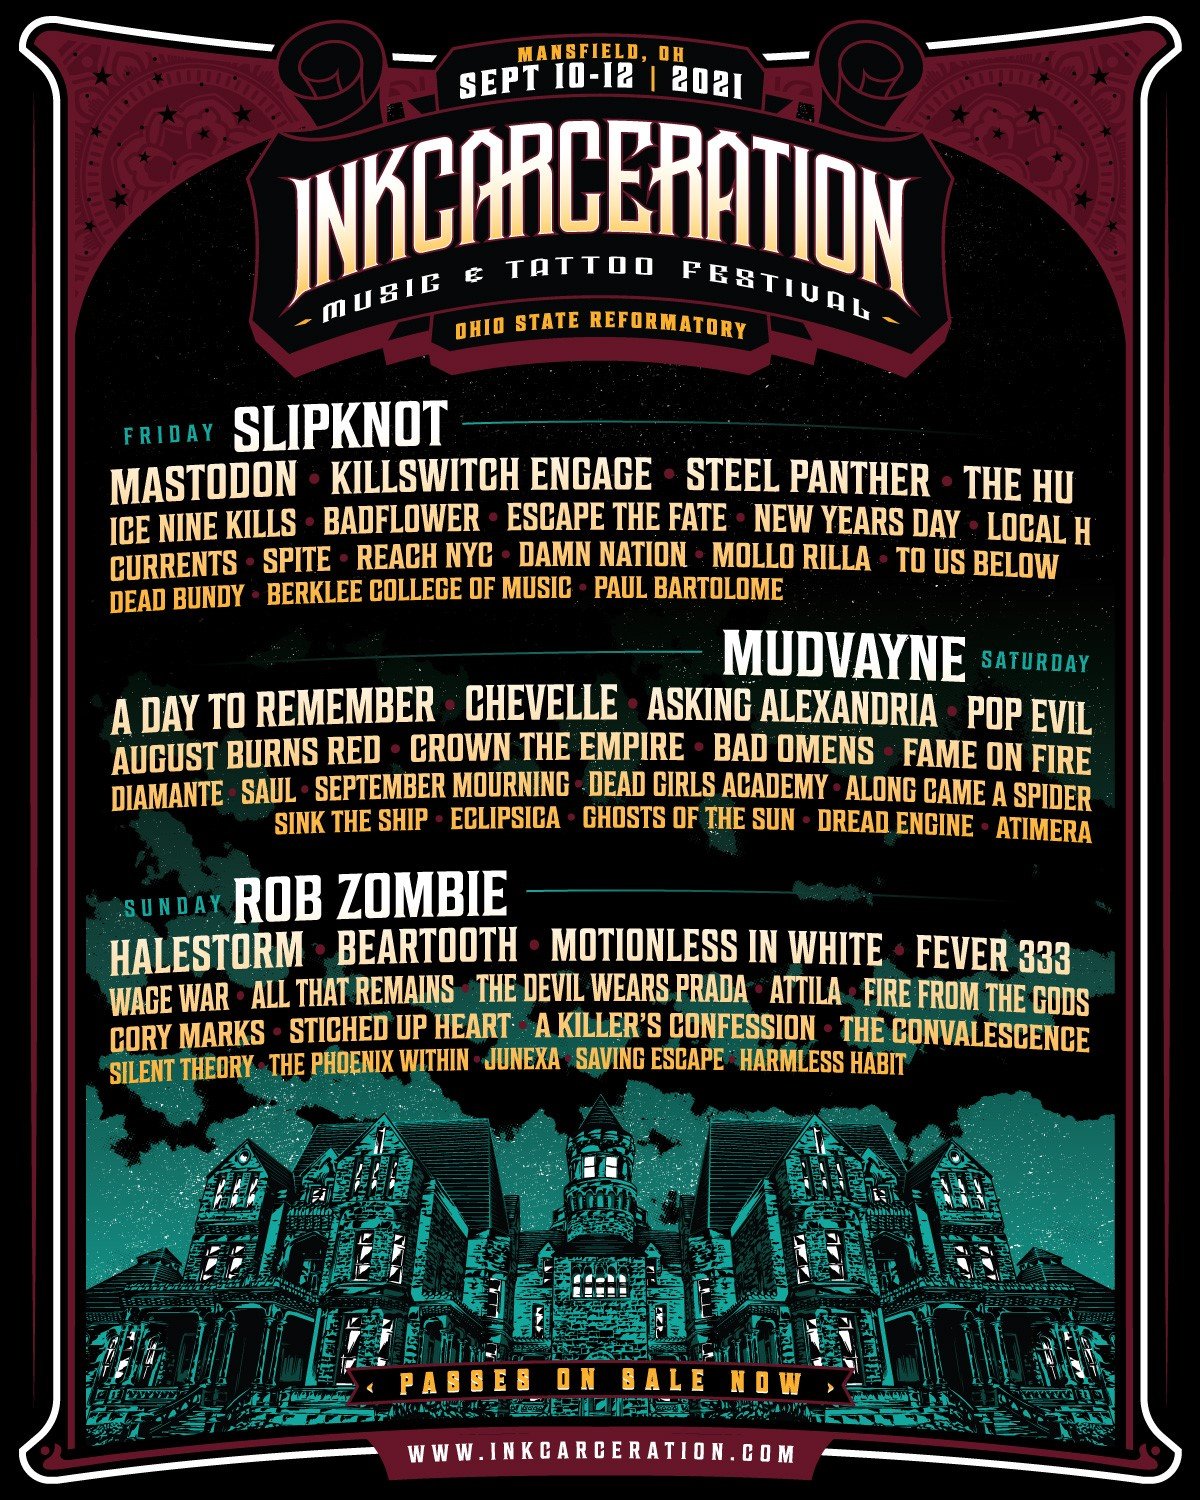 Inkcarceration Music Tattoo Festival Announced Featuring Slipknot Rob Zombie Reunited Mudvayne The Rockpit